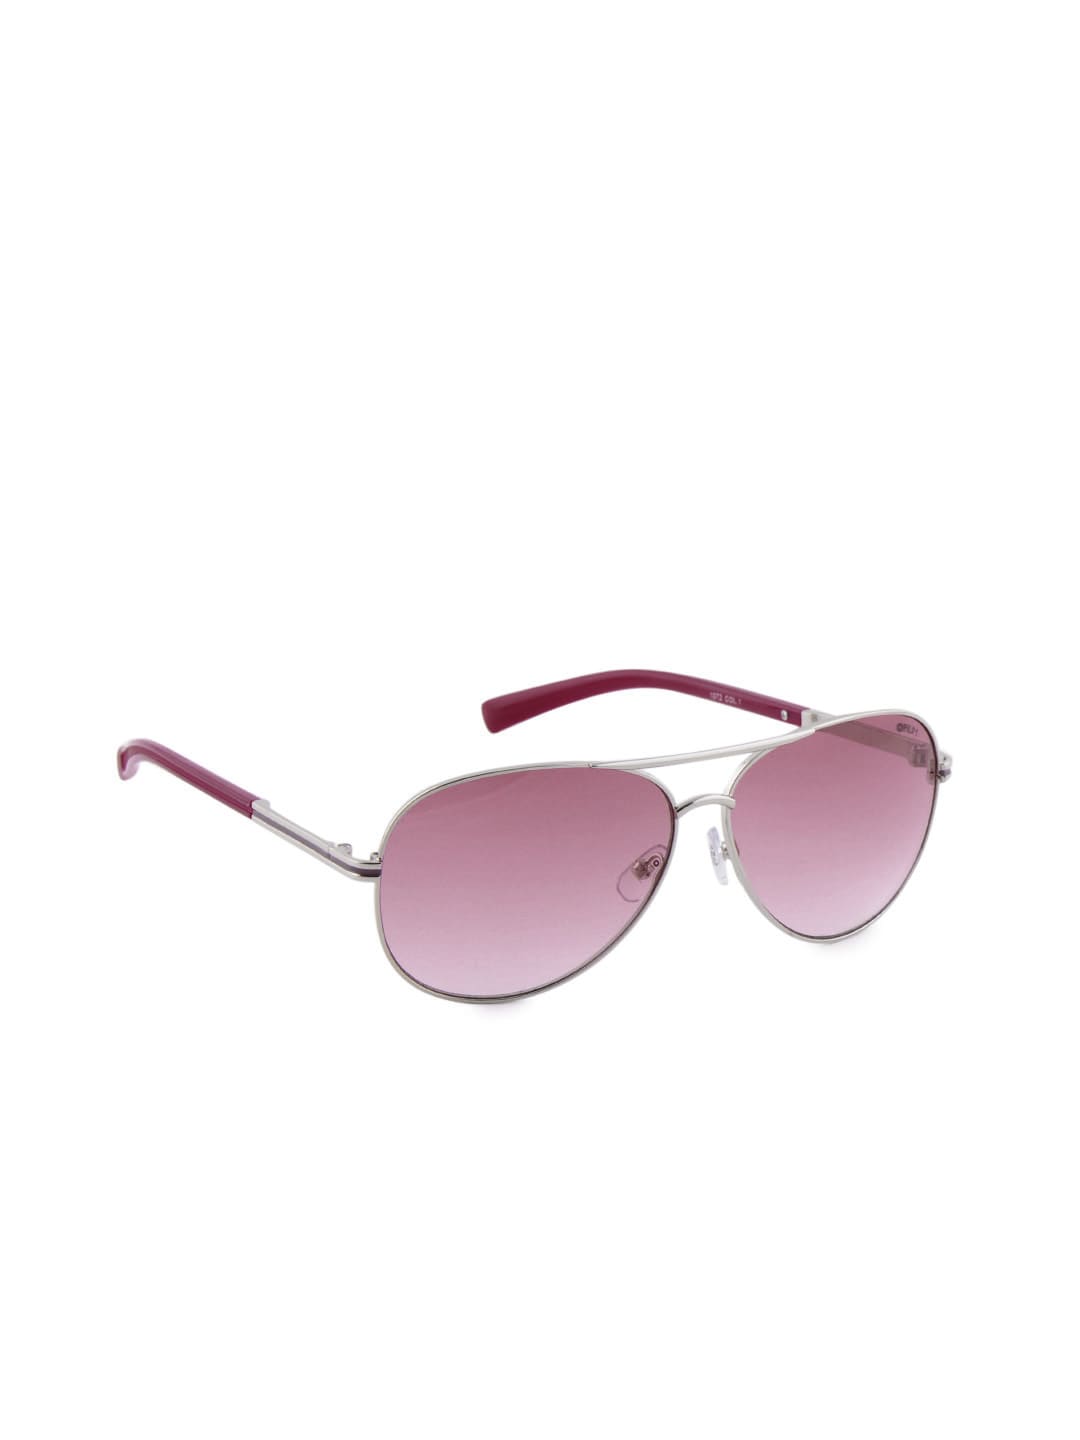 Opium Men Aviator Pink Sunglasses